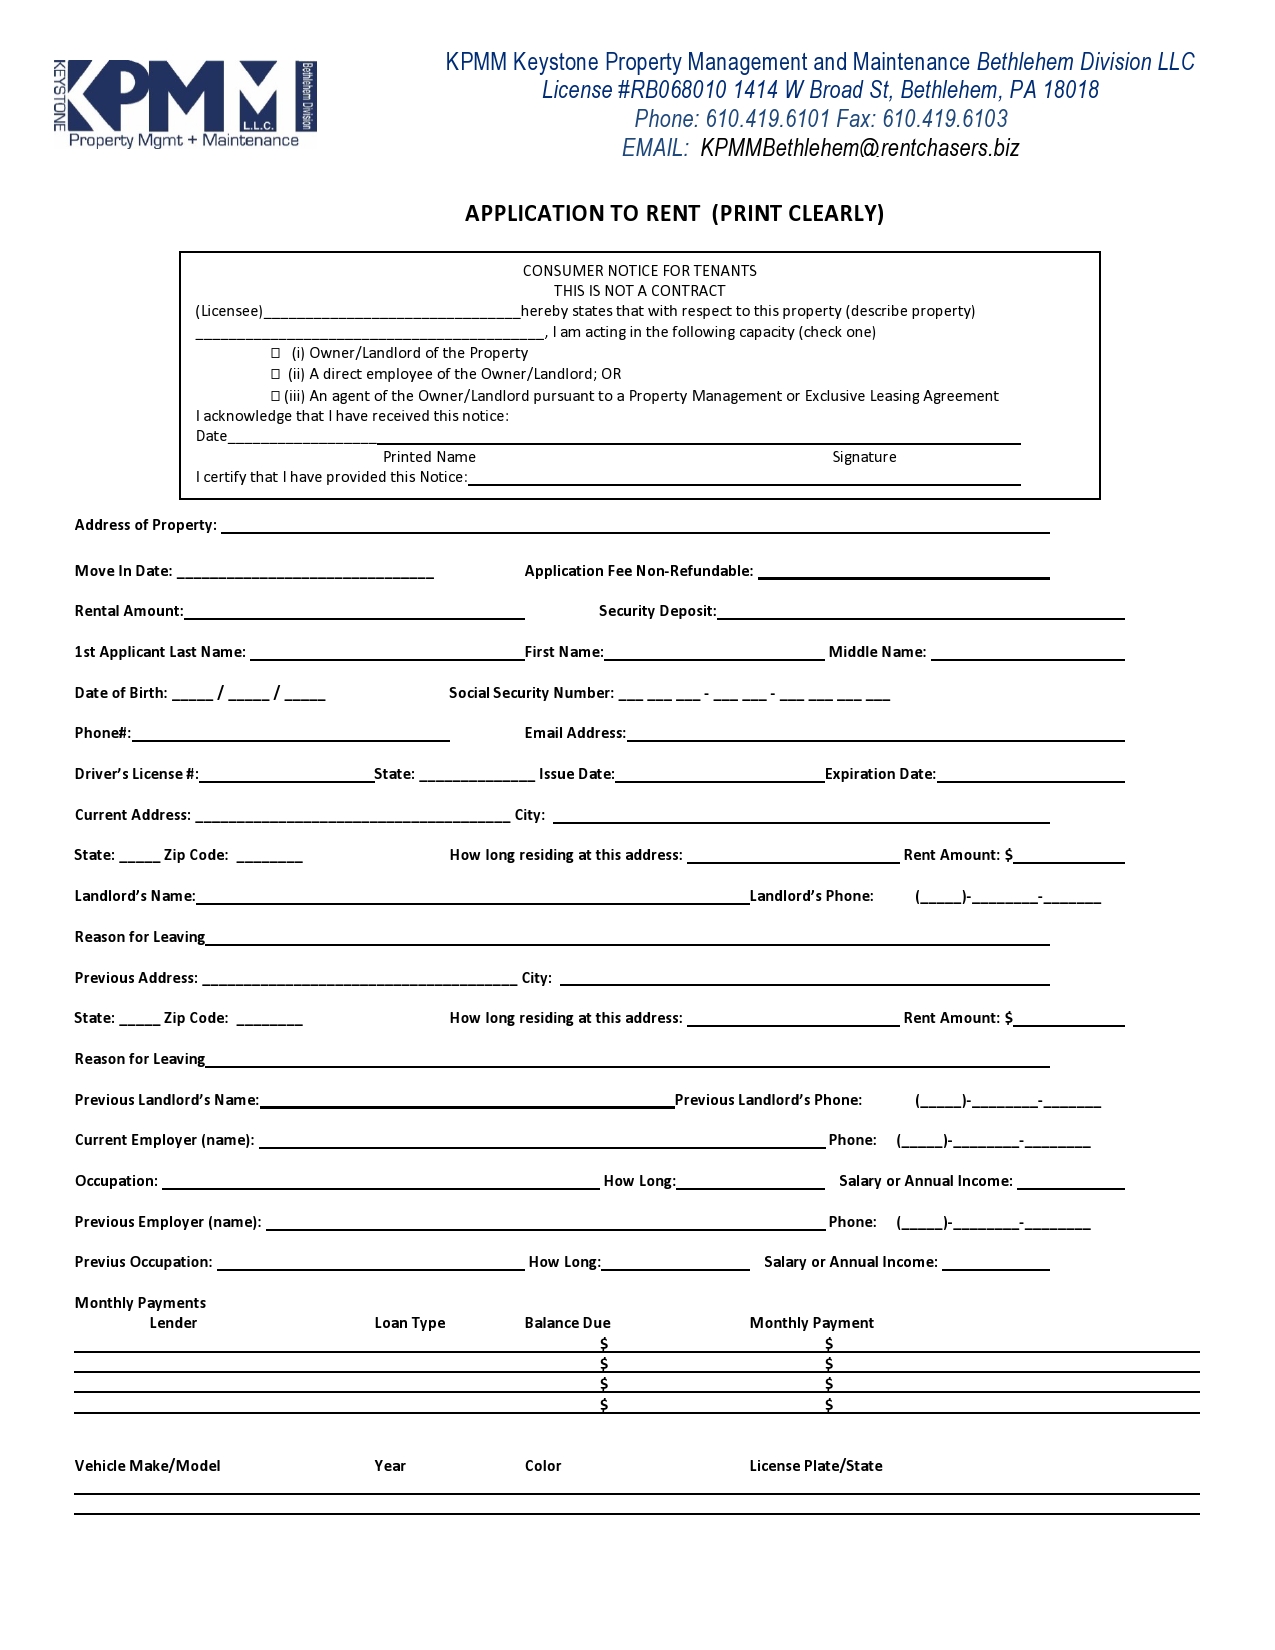 Free rental application form 17